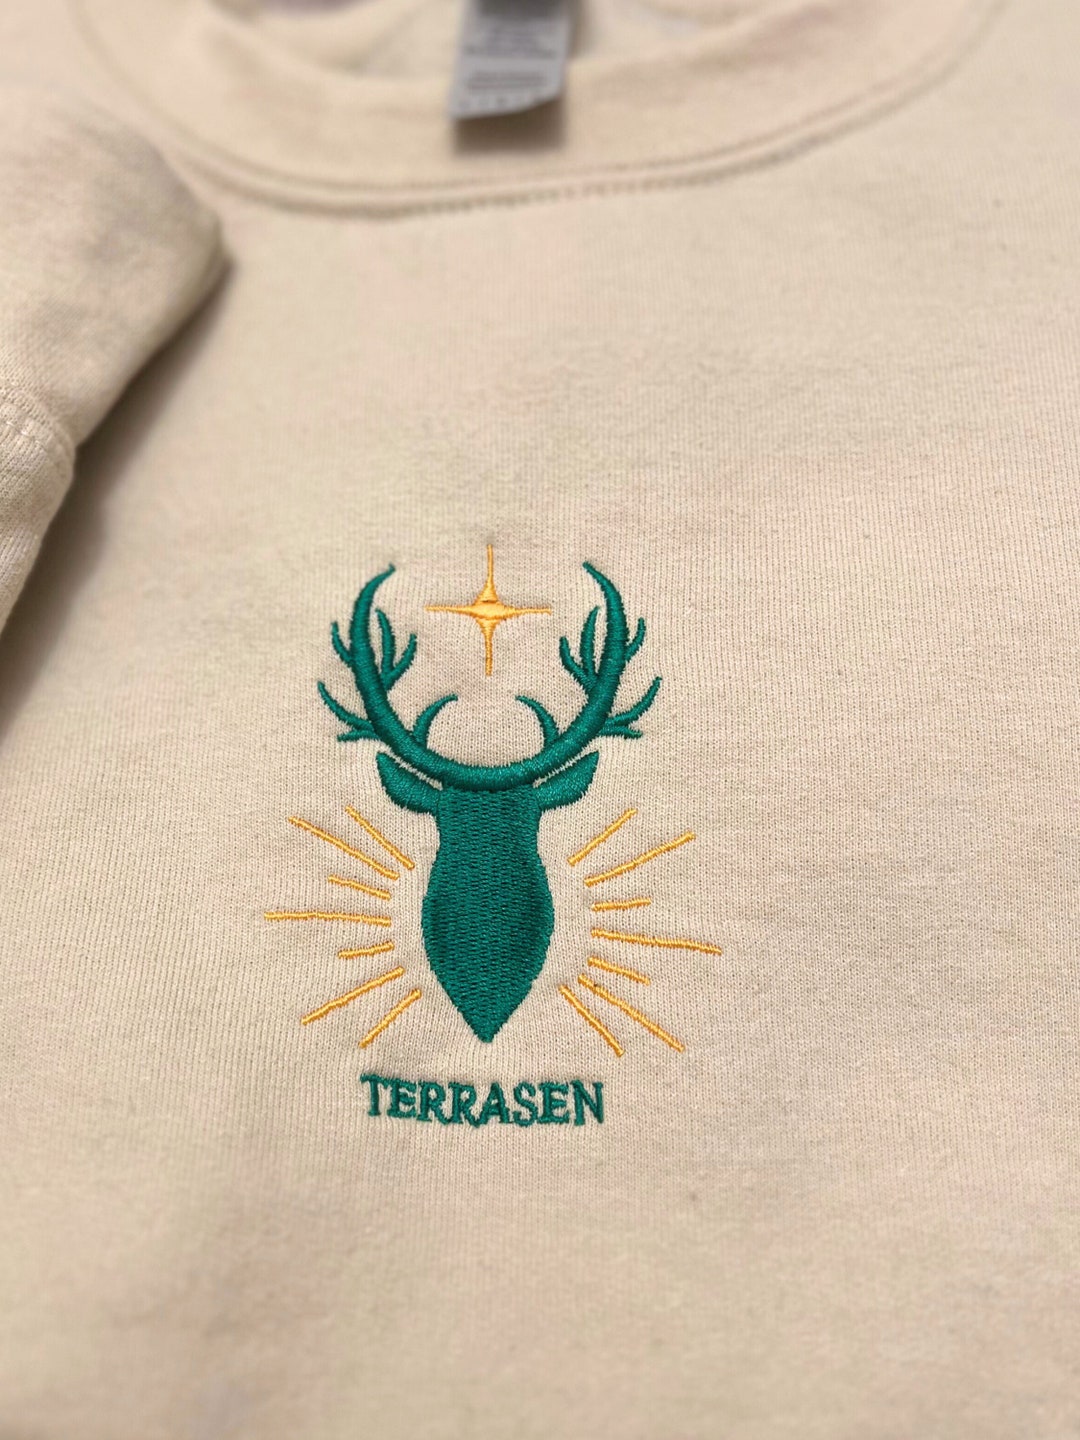 Terrasen Stag Embroidered Sweatshirt Sarah J Maas Throne of Glass SJM ...